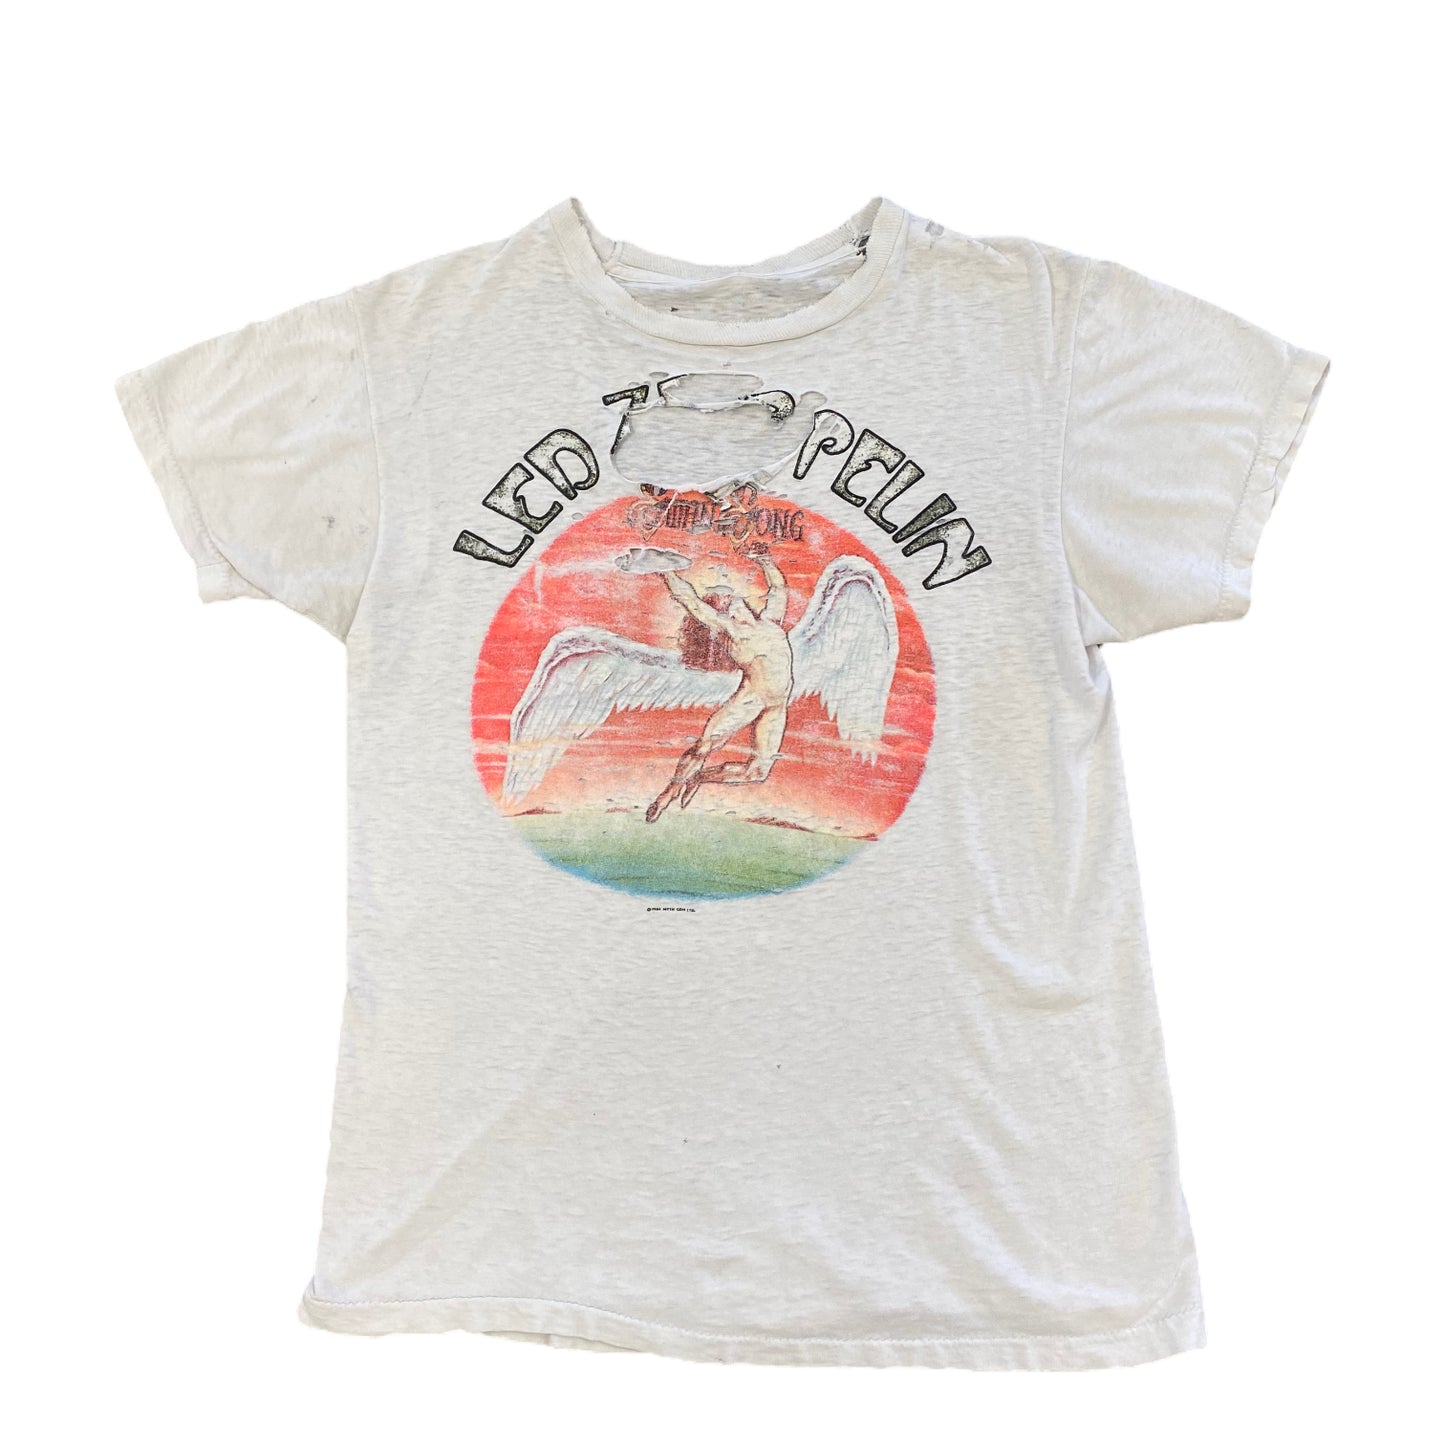 1984 Led Zeppelin band T-shirt